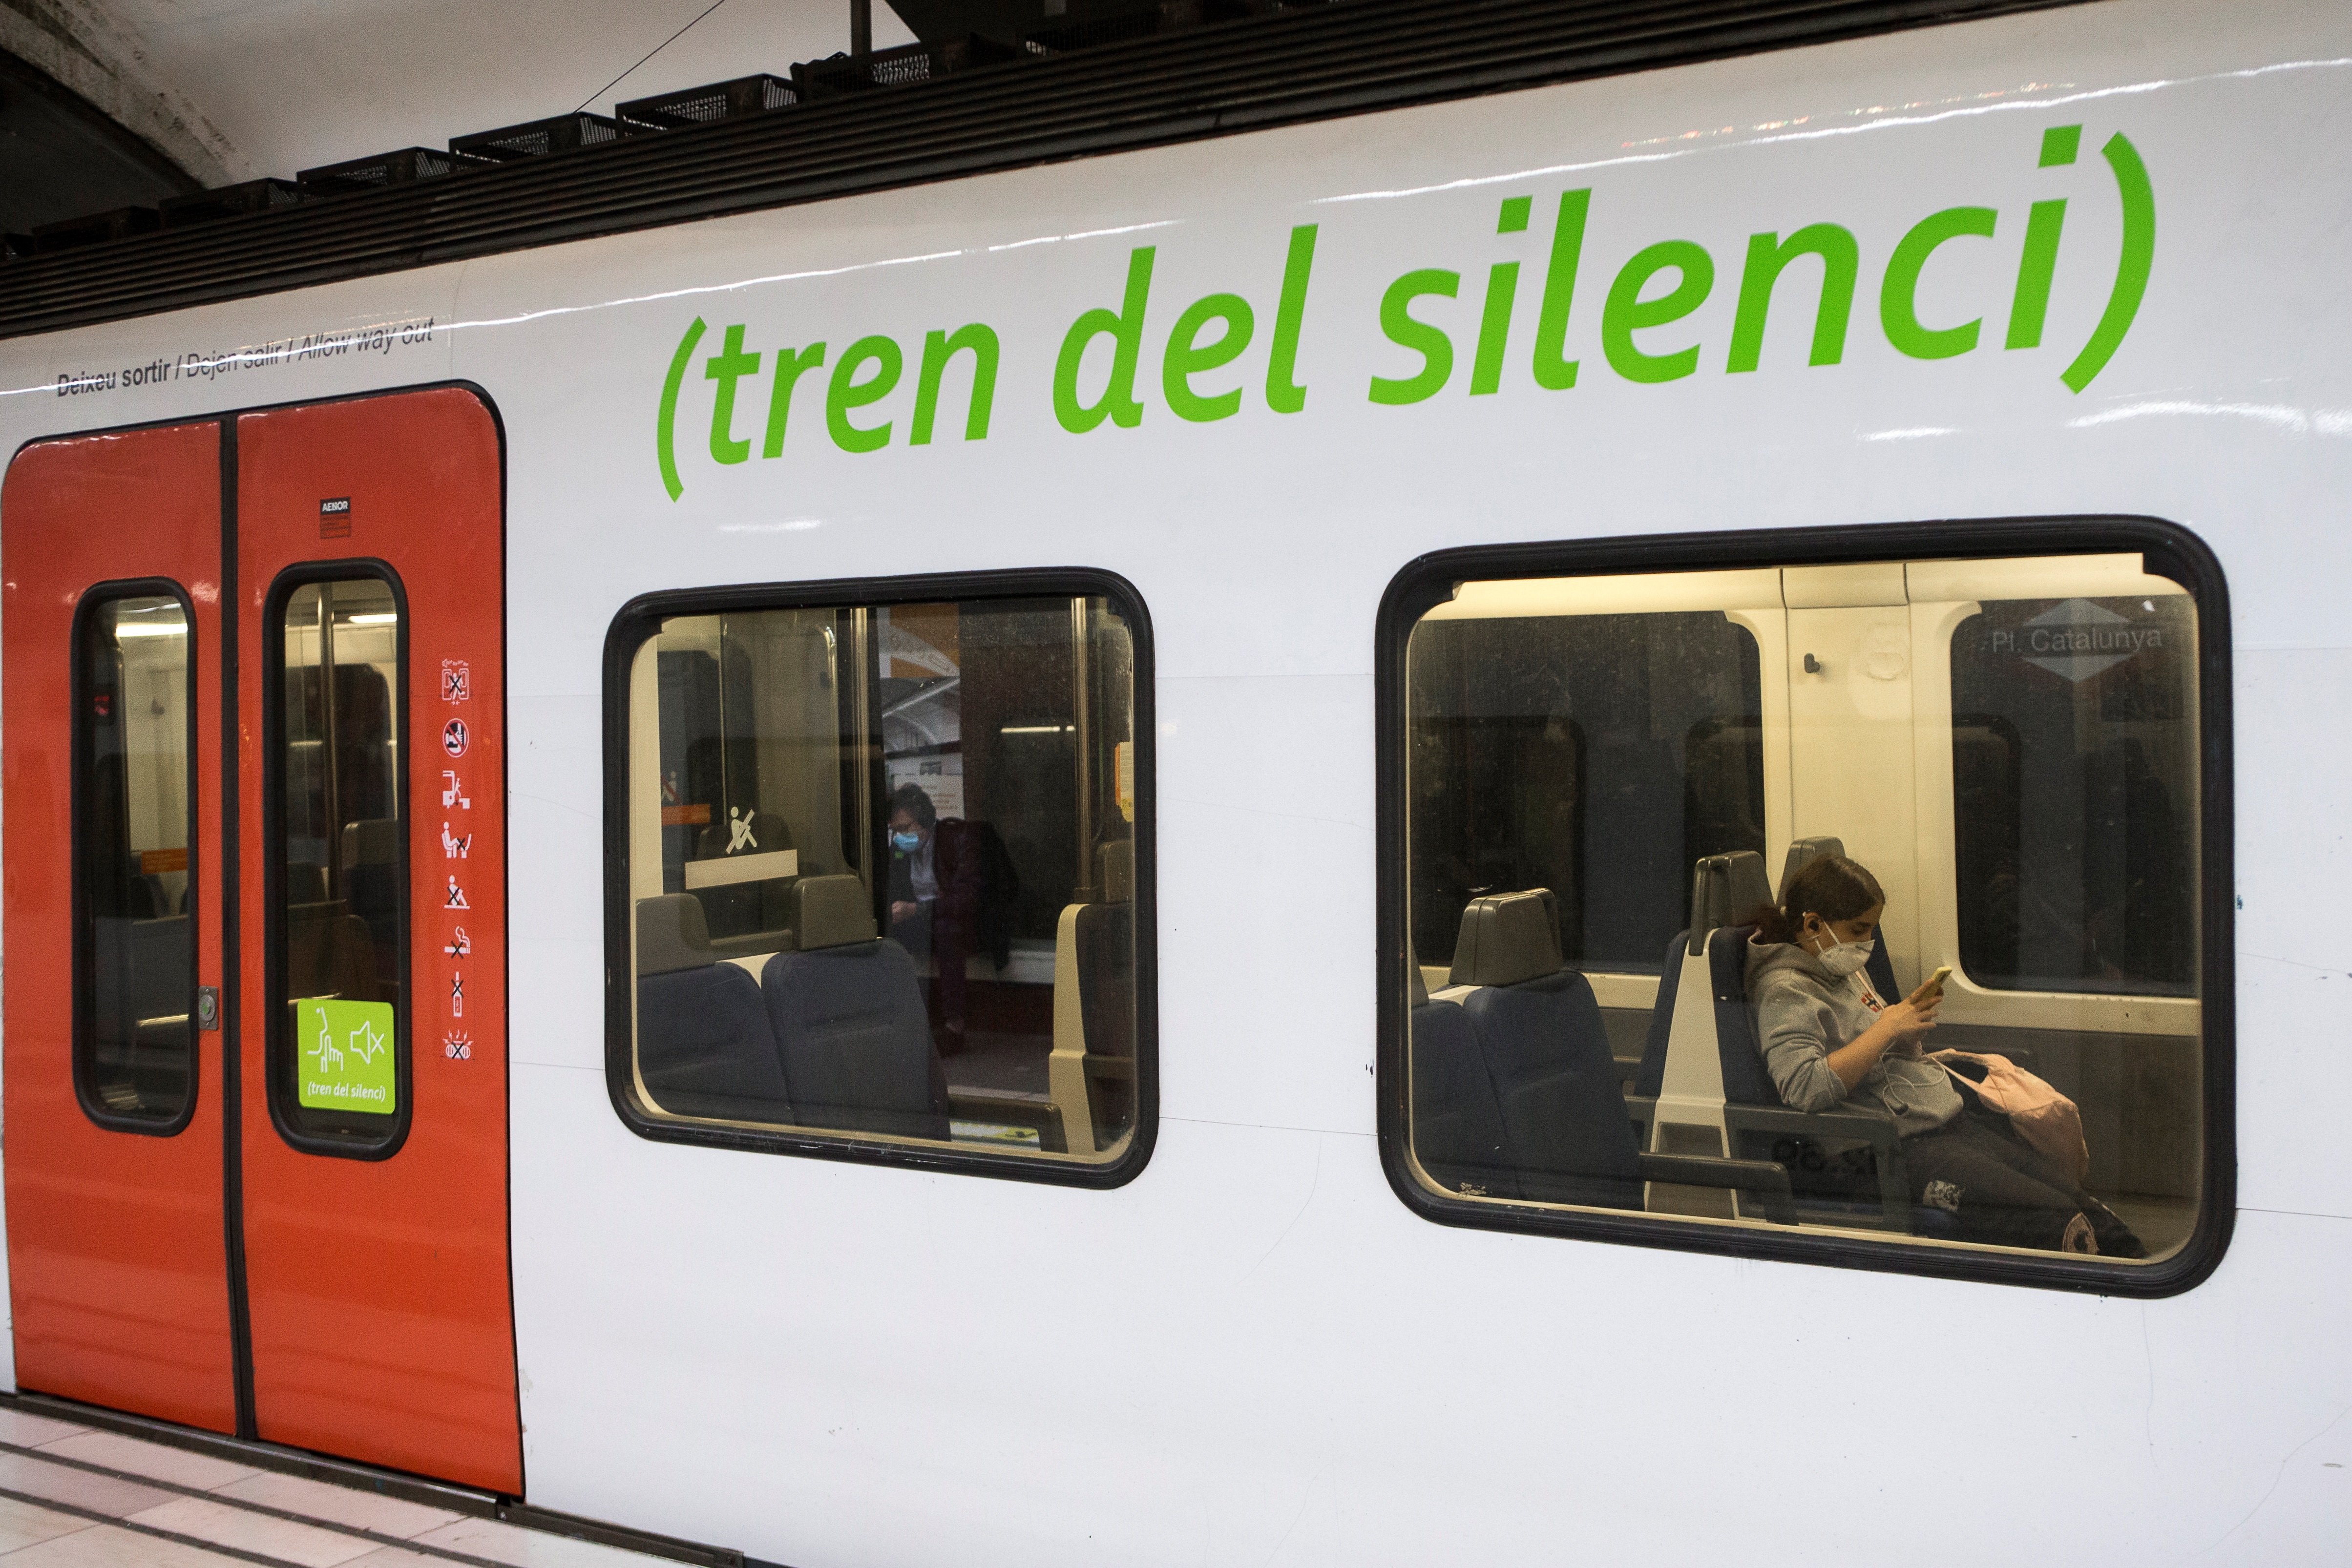 El tren del silencio, la idea catalana que sorprende a 'The Telegraph'